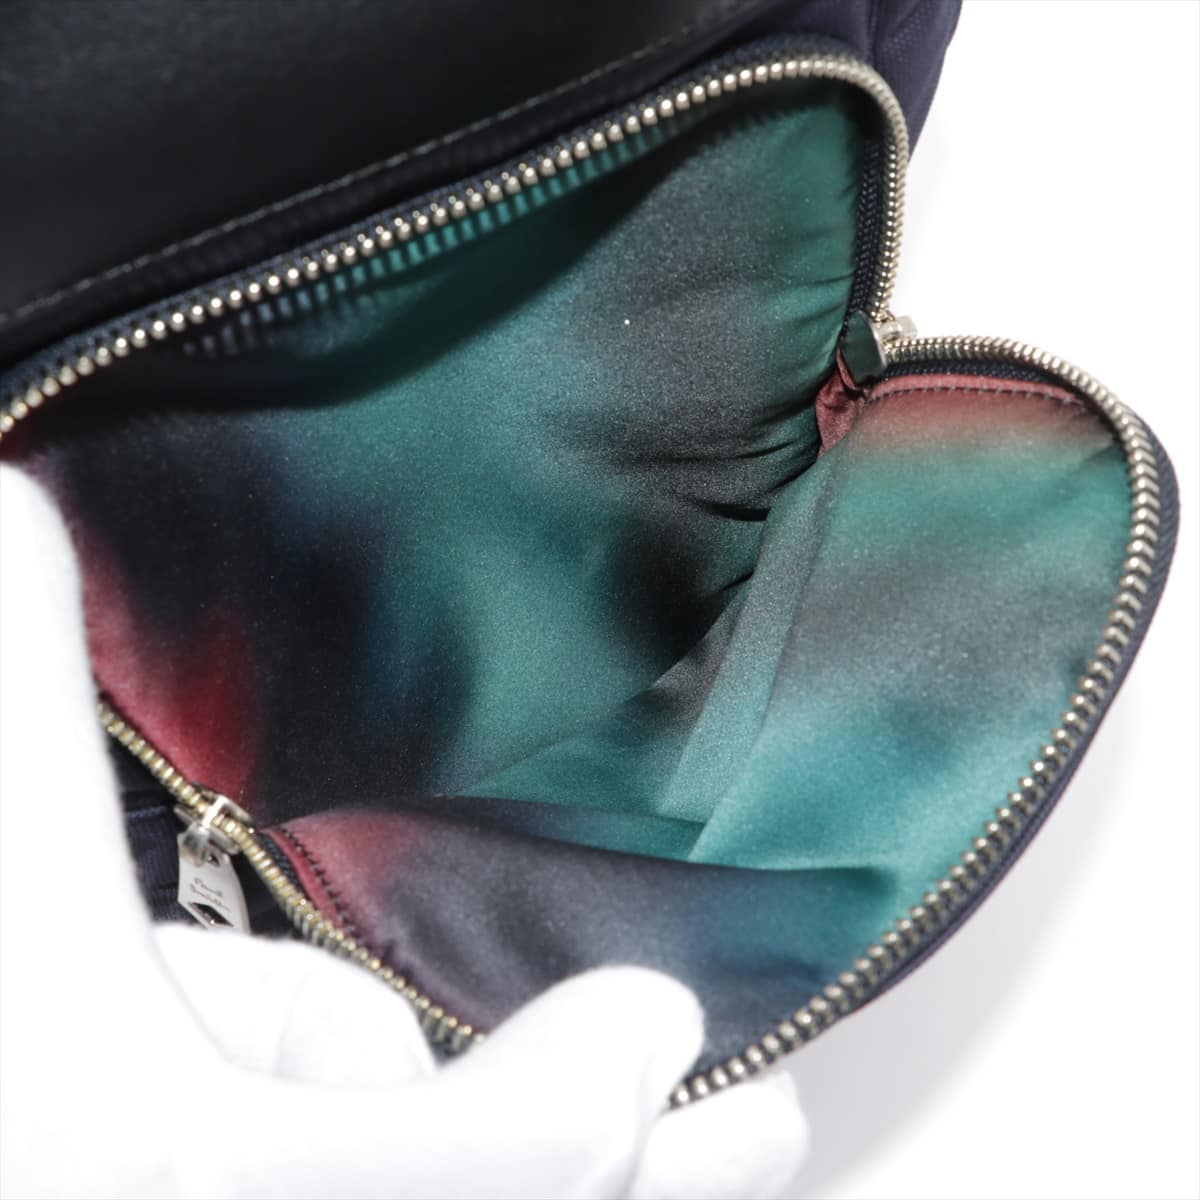 Paul Smith Nylon & leather Sling backpack Black x Navy